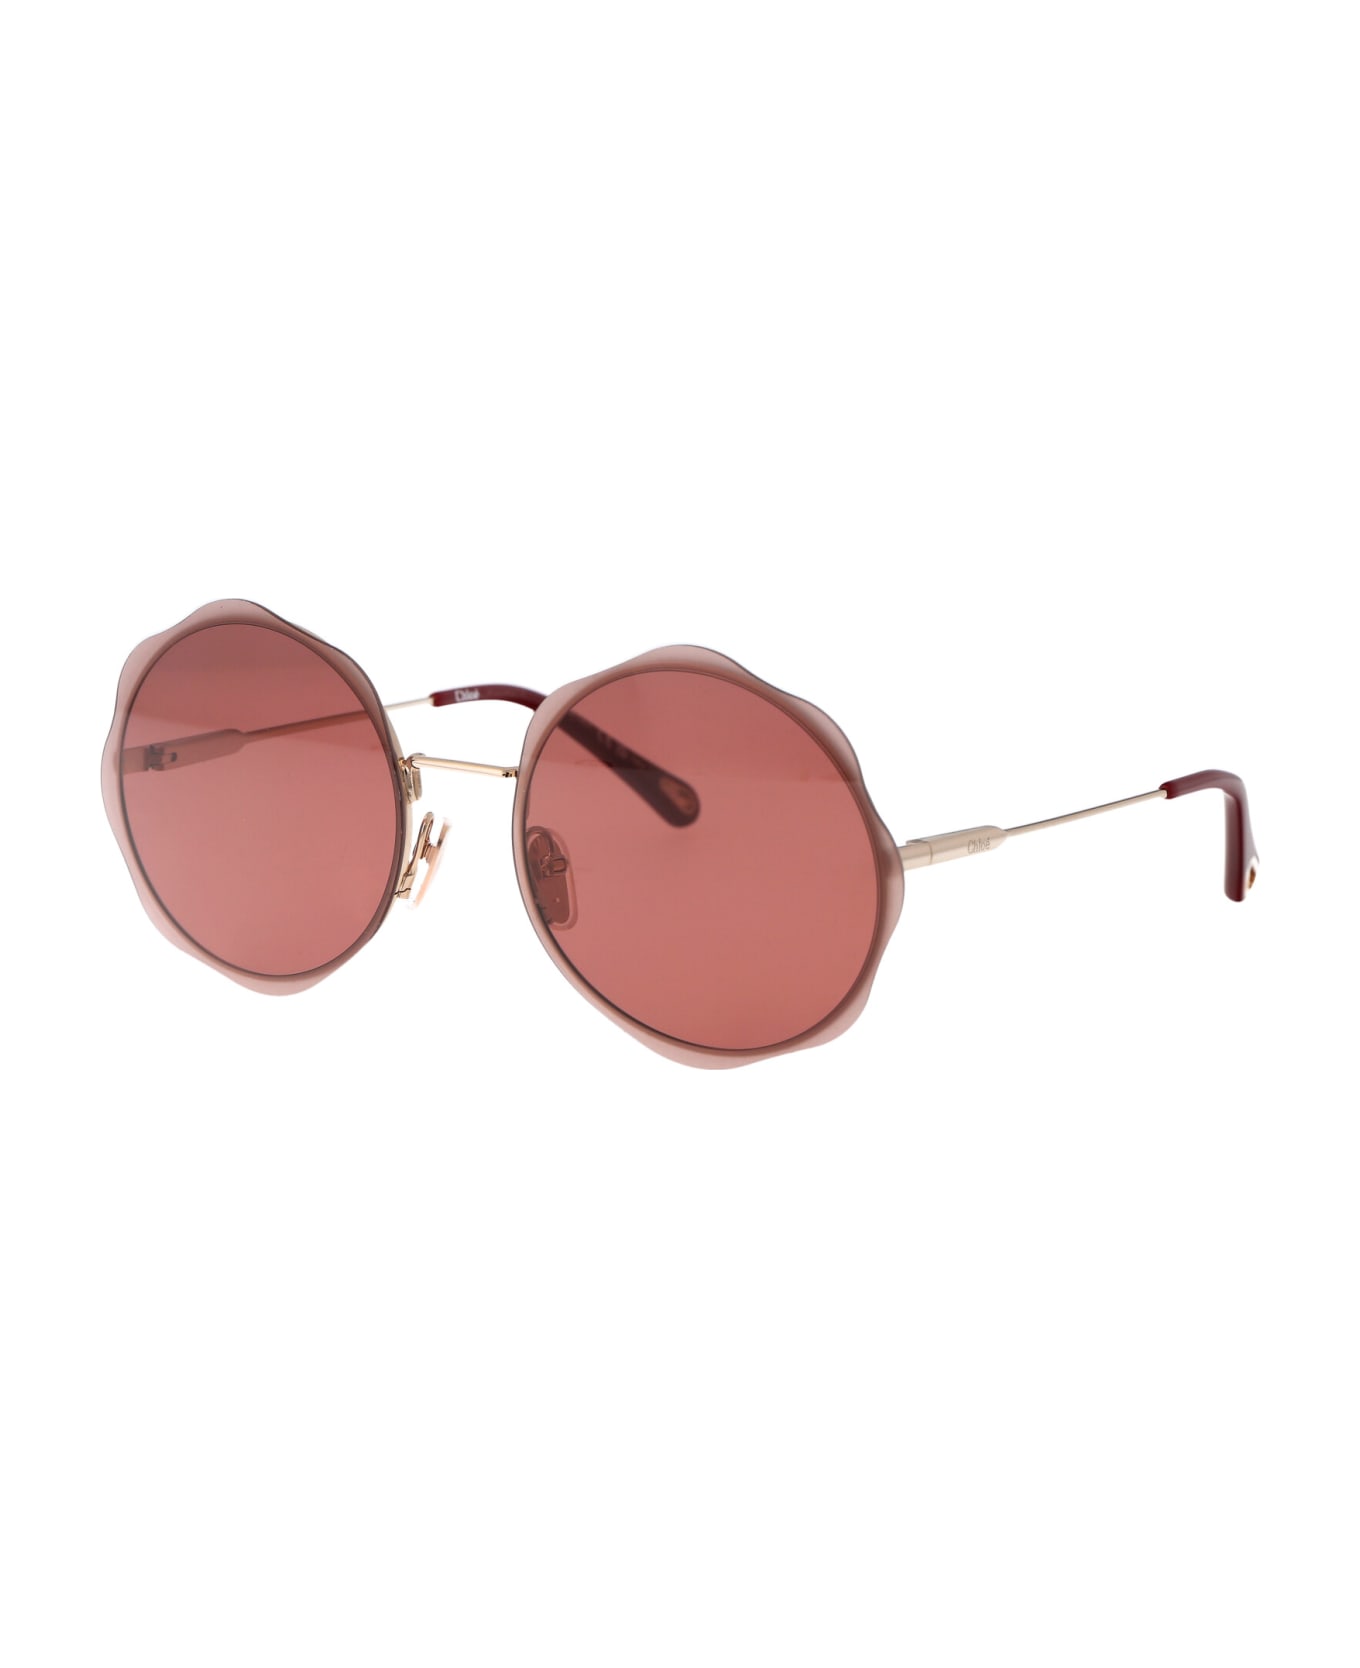 Chloé Eyewear Ch0202s Sunglasses - 003 GOLD GOLD RED サングラス